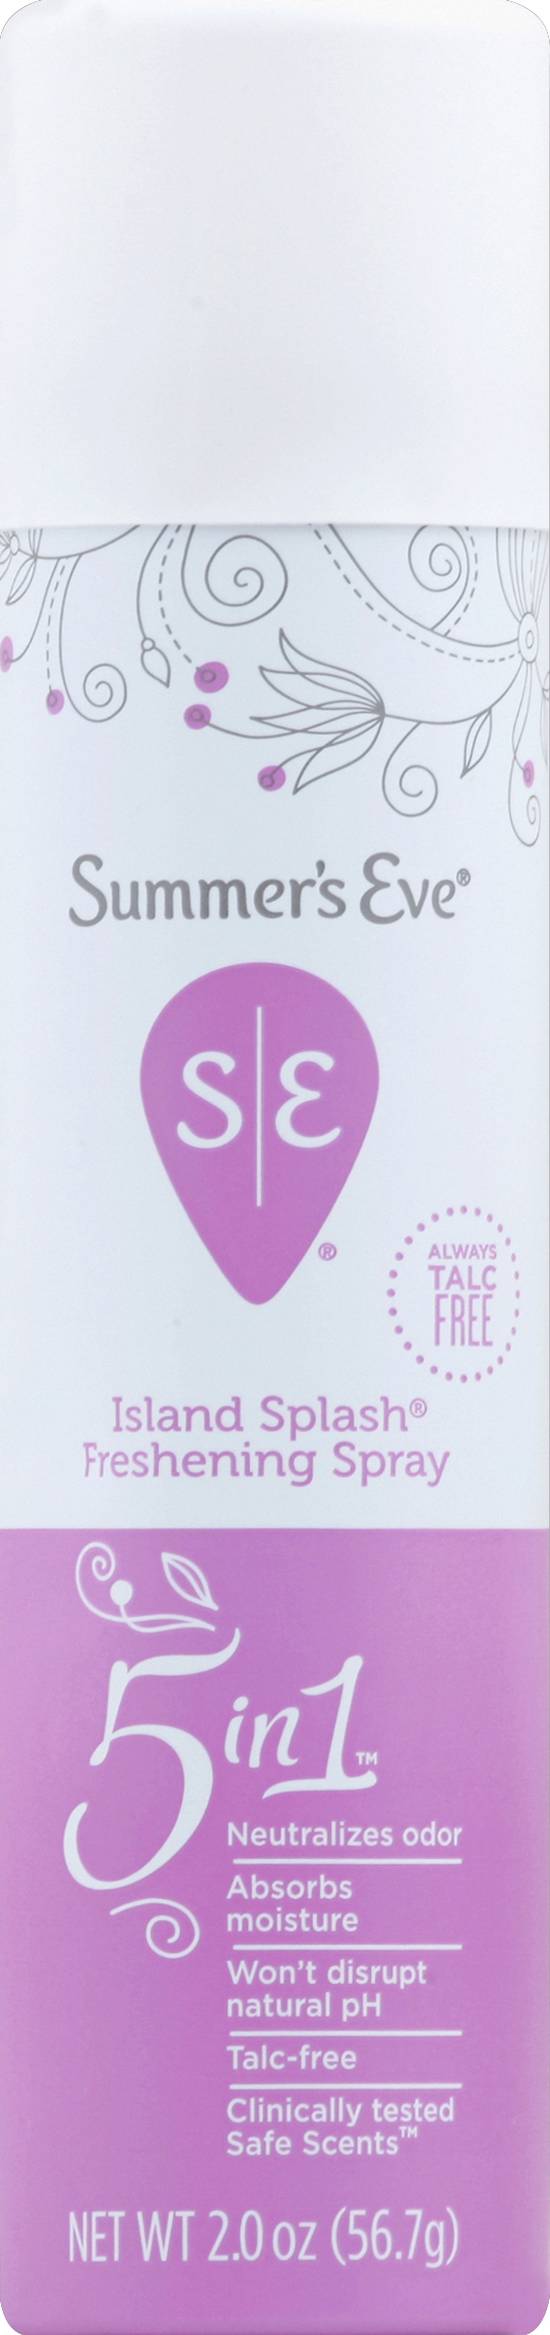 Summer's Eve Island Splash Freshening Feminine Deodorant Spray